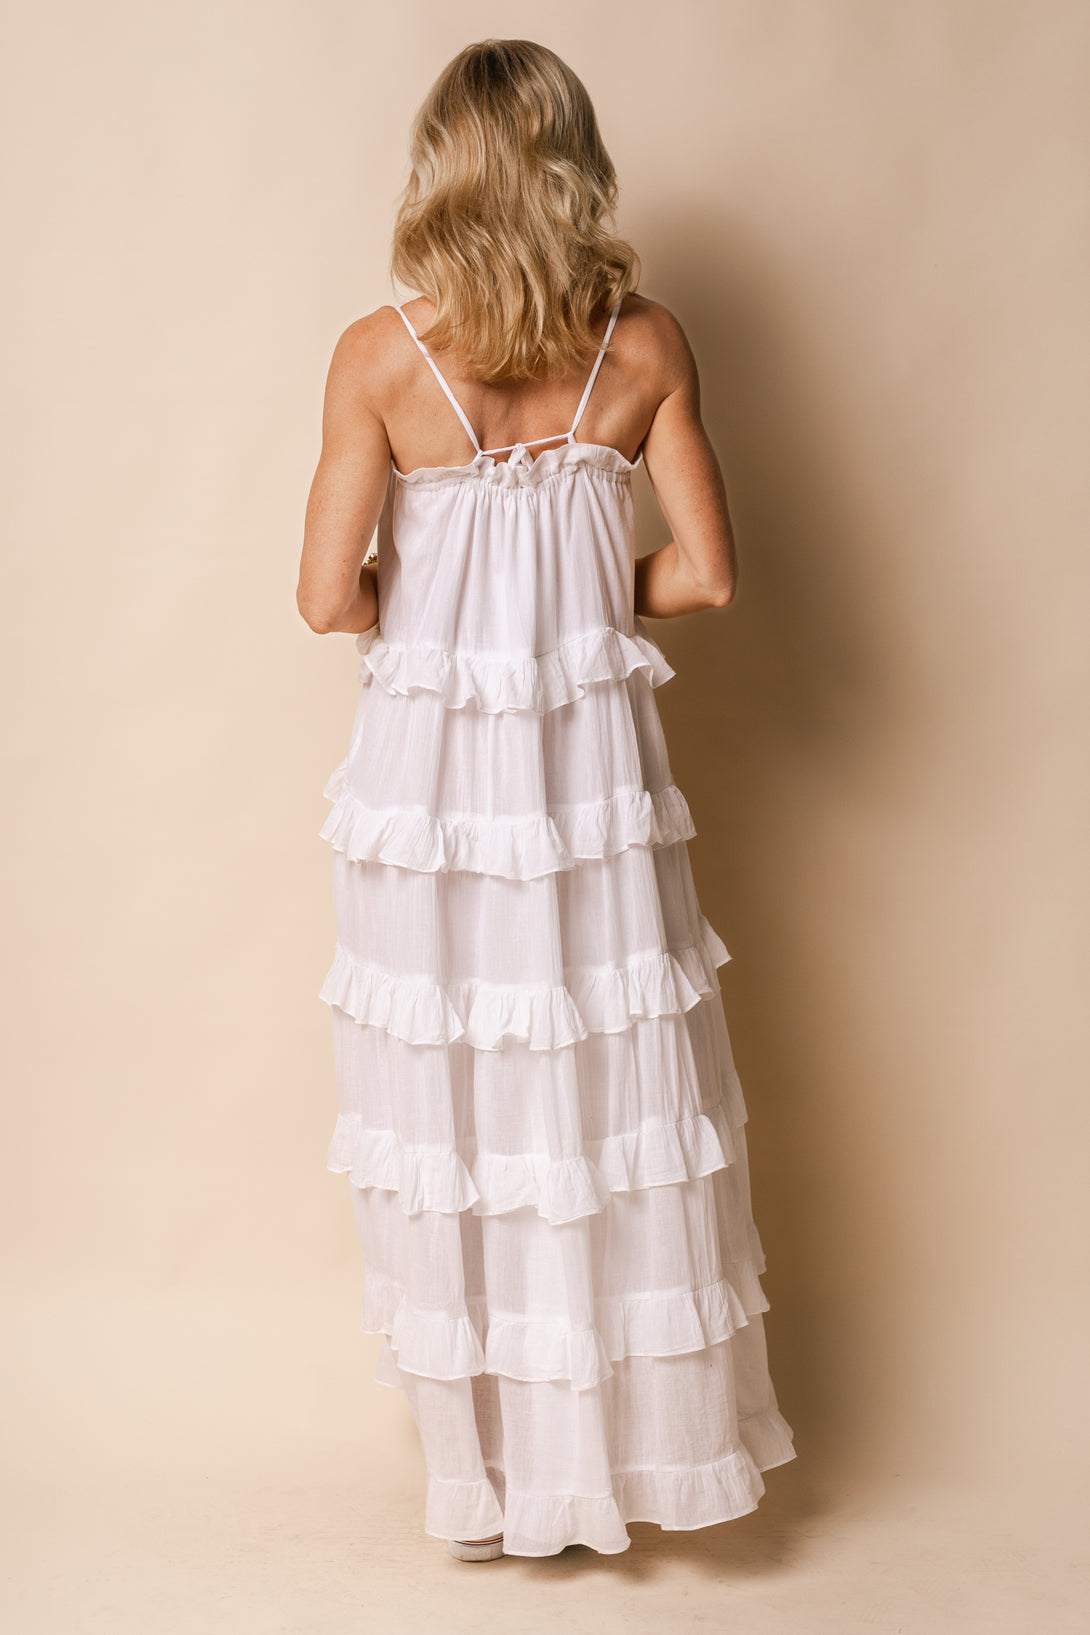 Callie Cotton Dress in White - Imagine Fashion